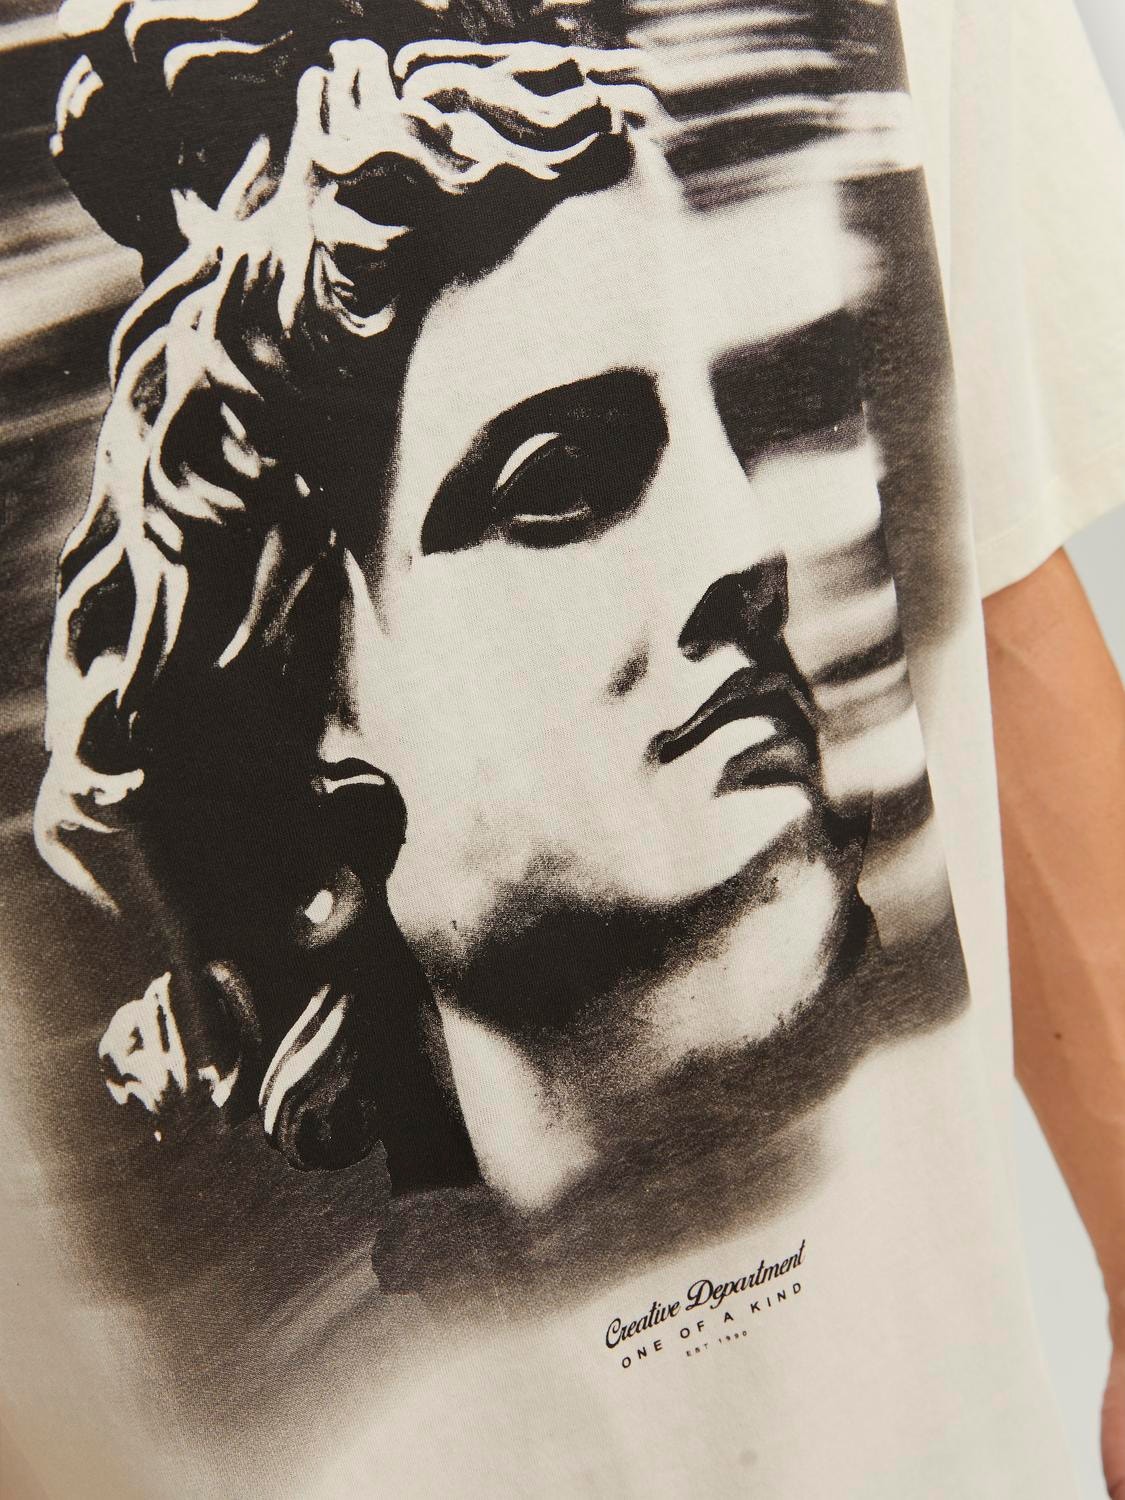 Jack & Jones Printet Crew neck T-shirt -Egret - 12253889